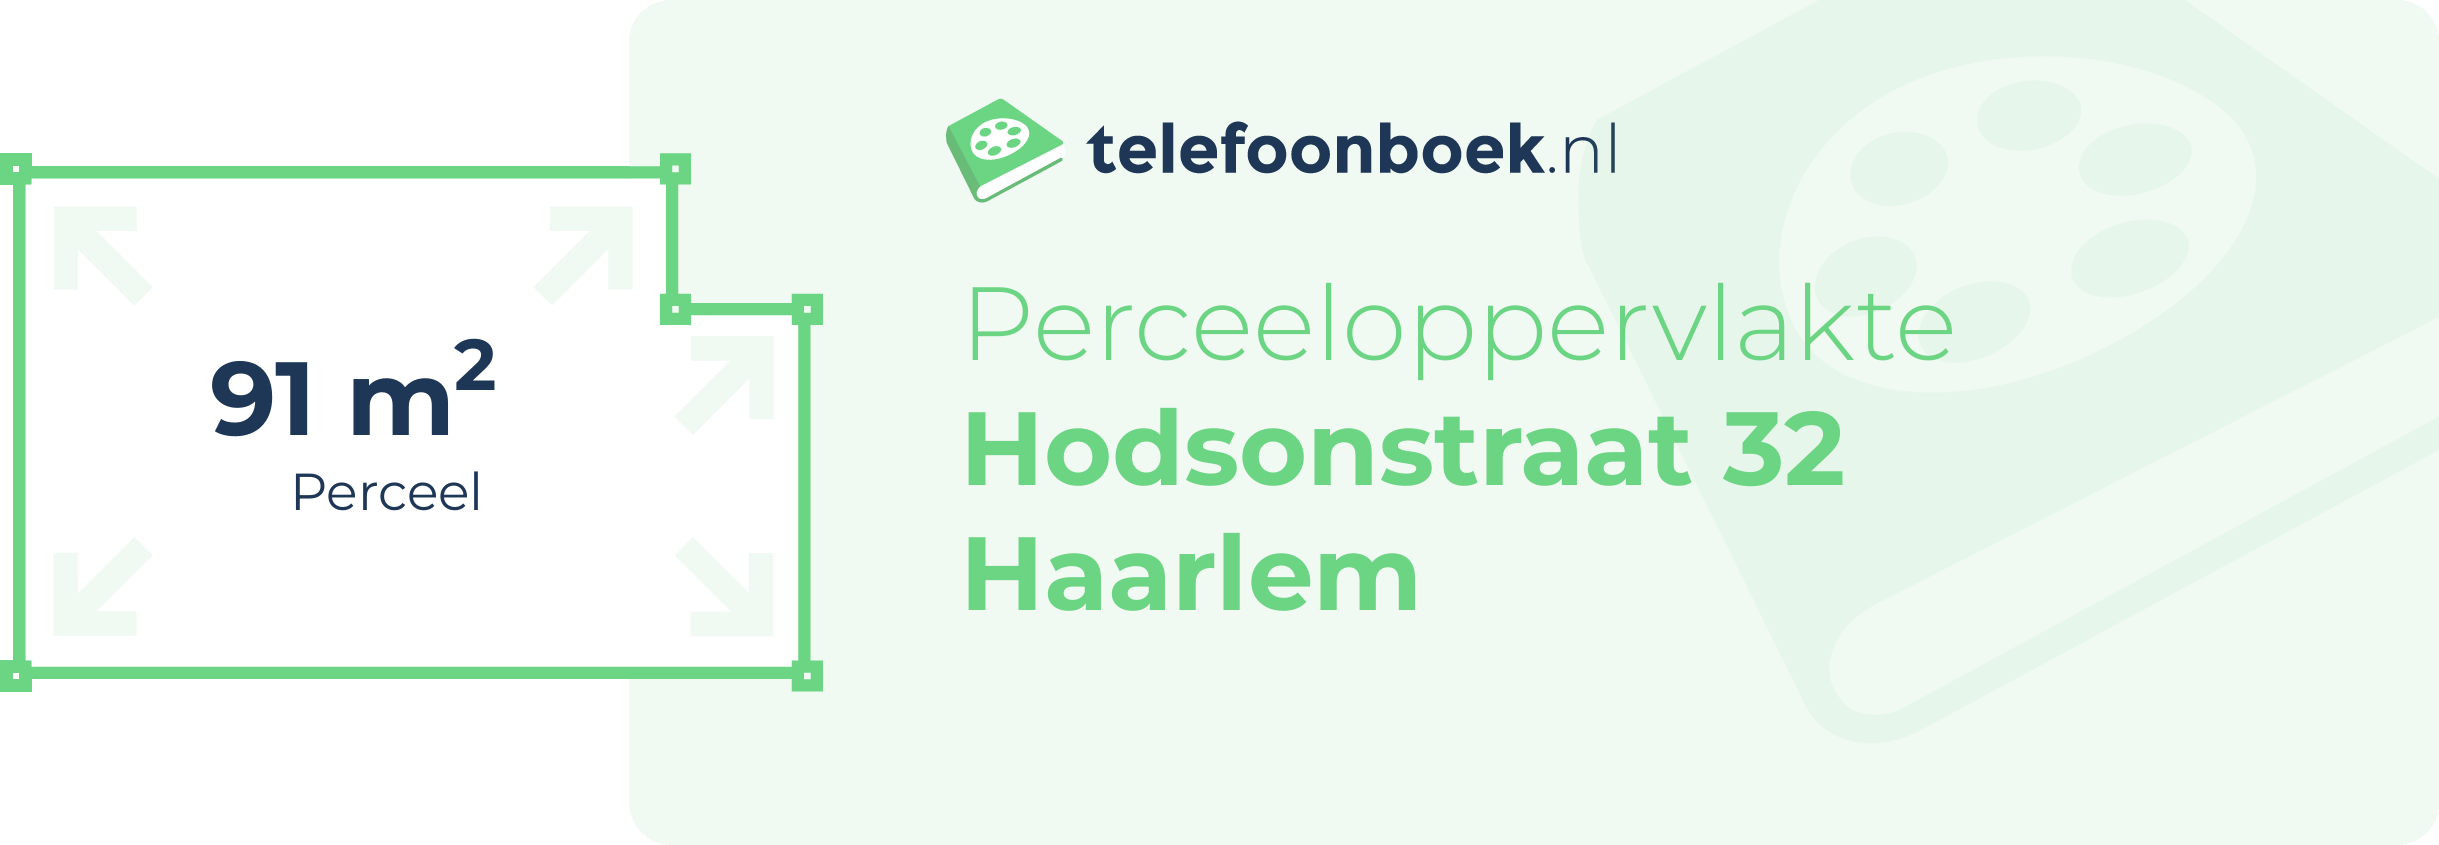 Perceeloppervlakte Hodsonstraat 32 Haarlem